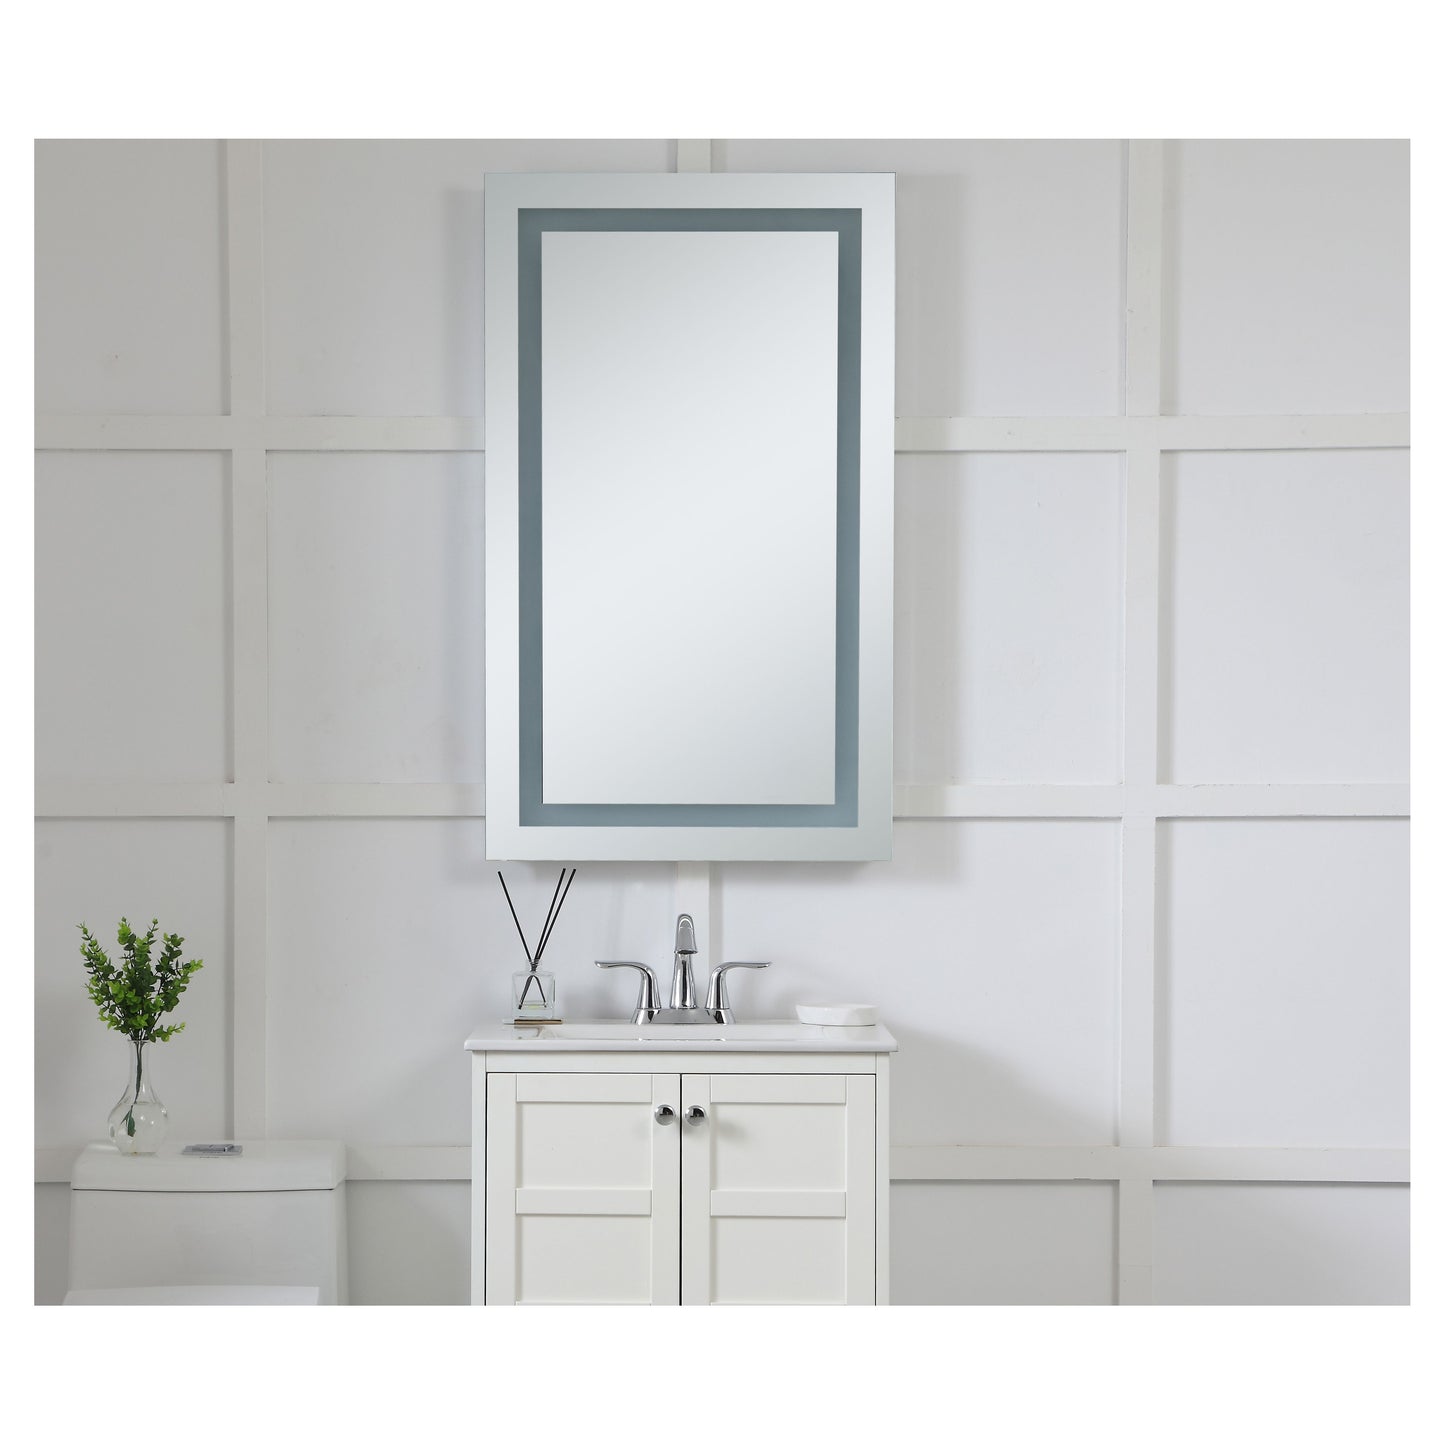 MRE-6014 Nova 24" x 40" LED Mirror in Glossy White - 3000K